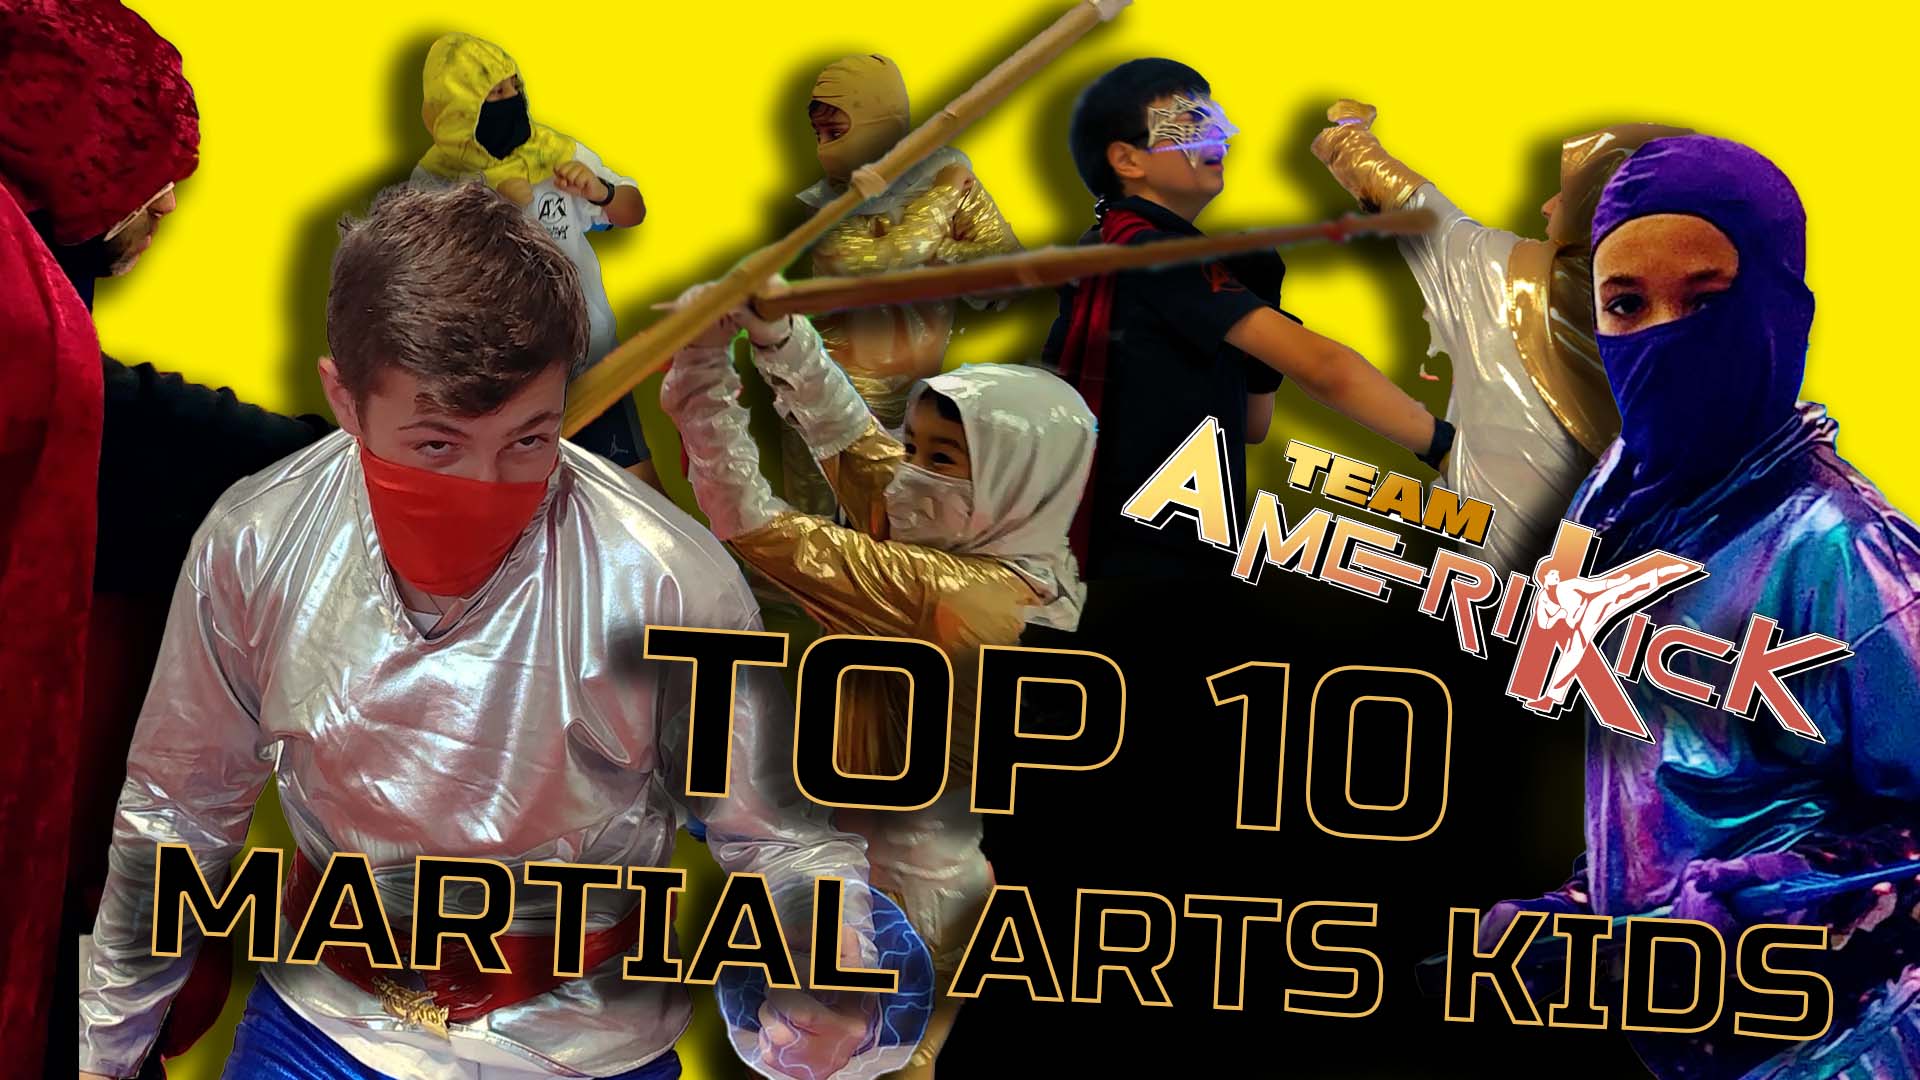 Amerikick Action | TOP TEN MARTIAL ARTS KIDS COUNTDOWN